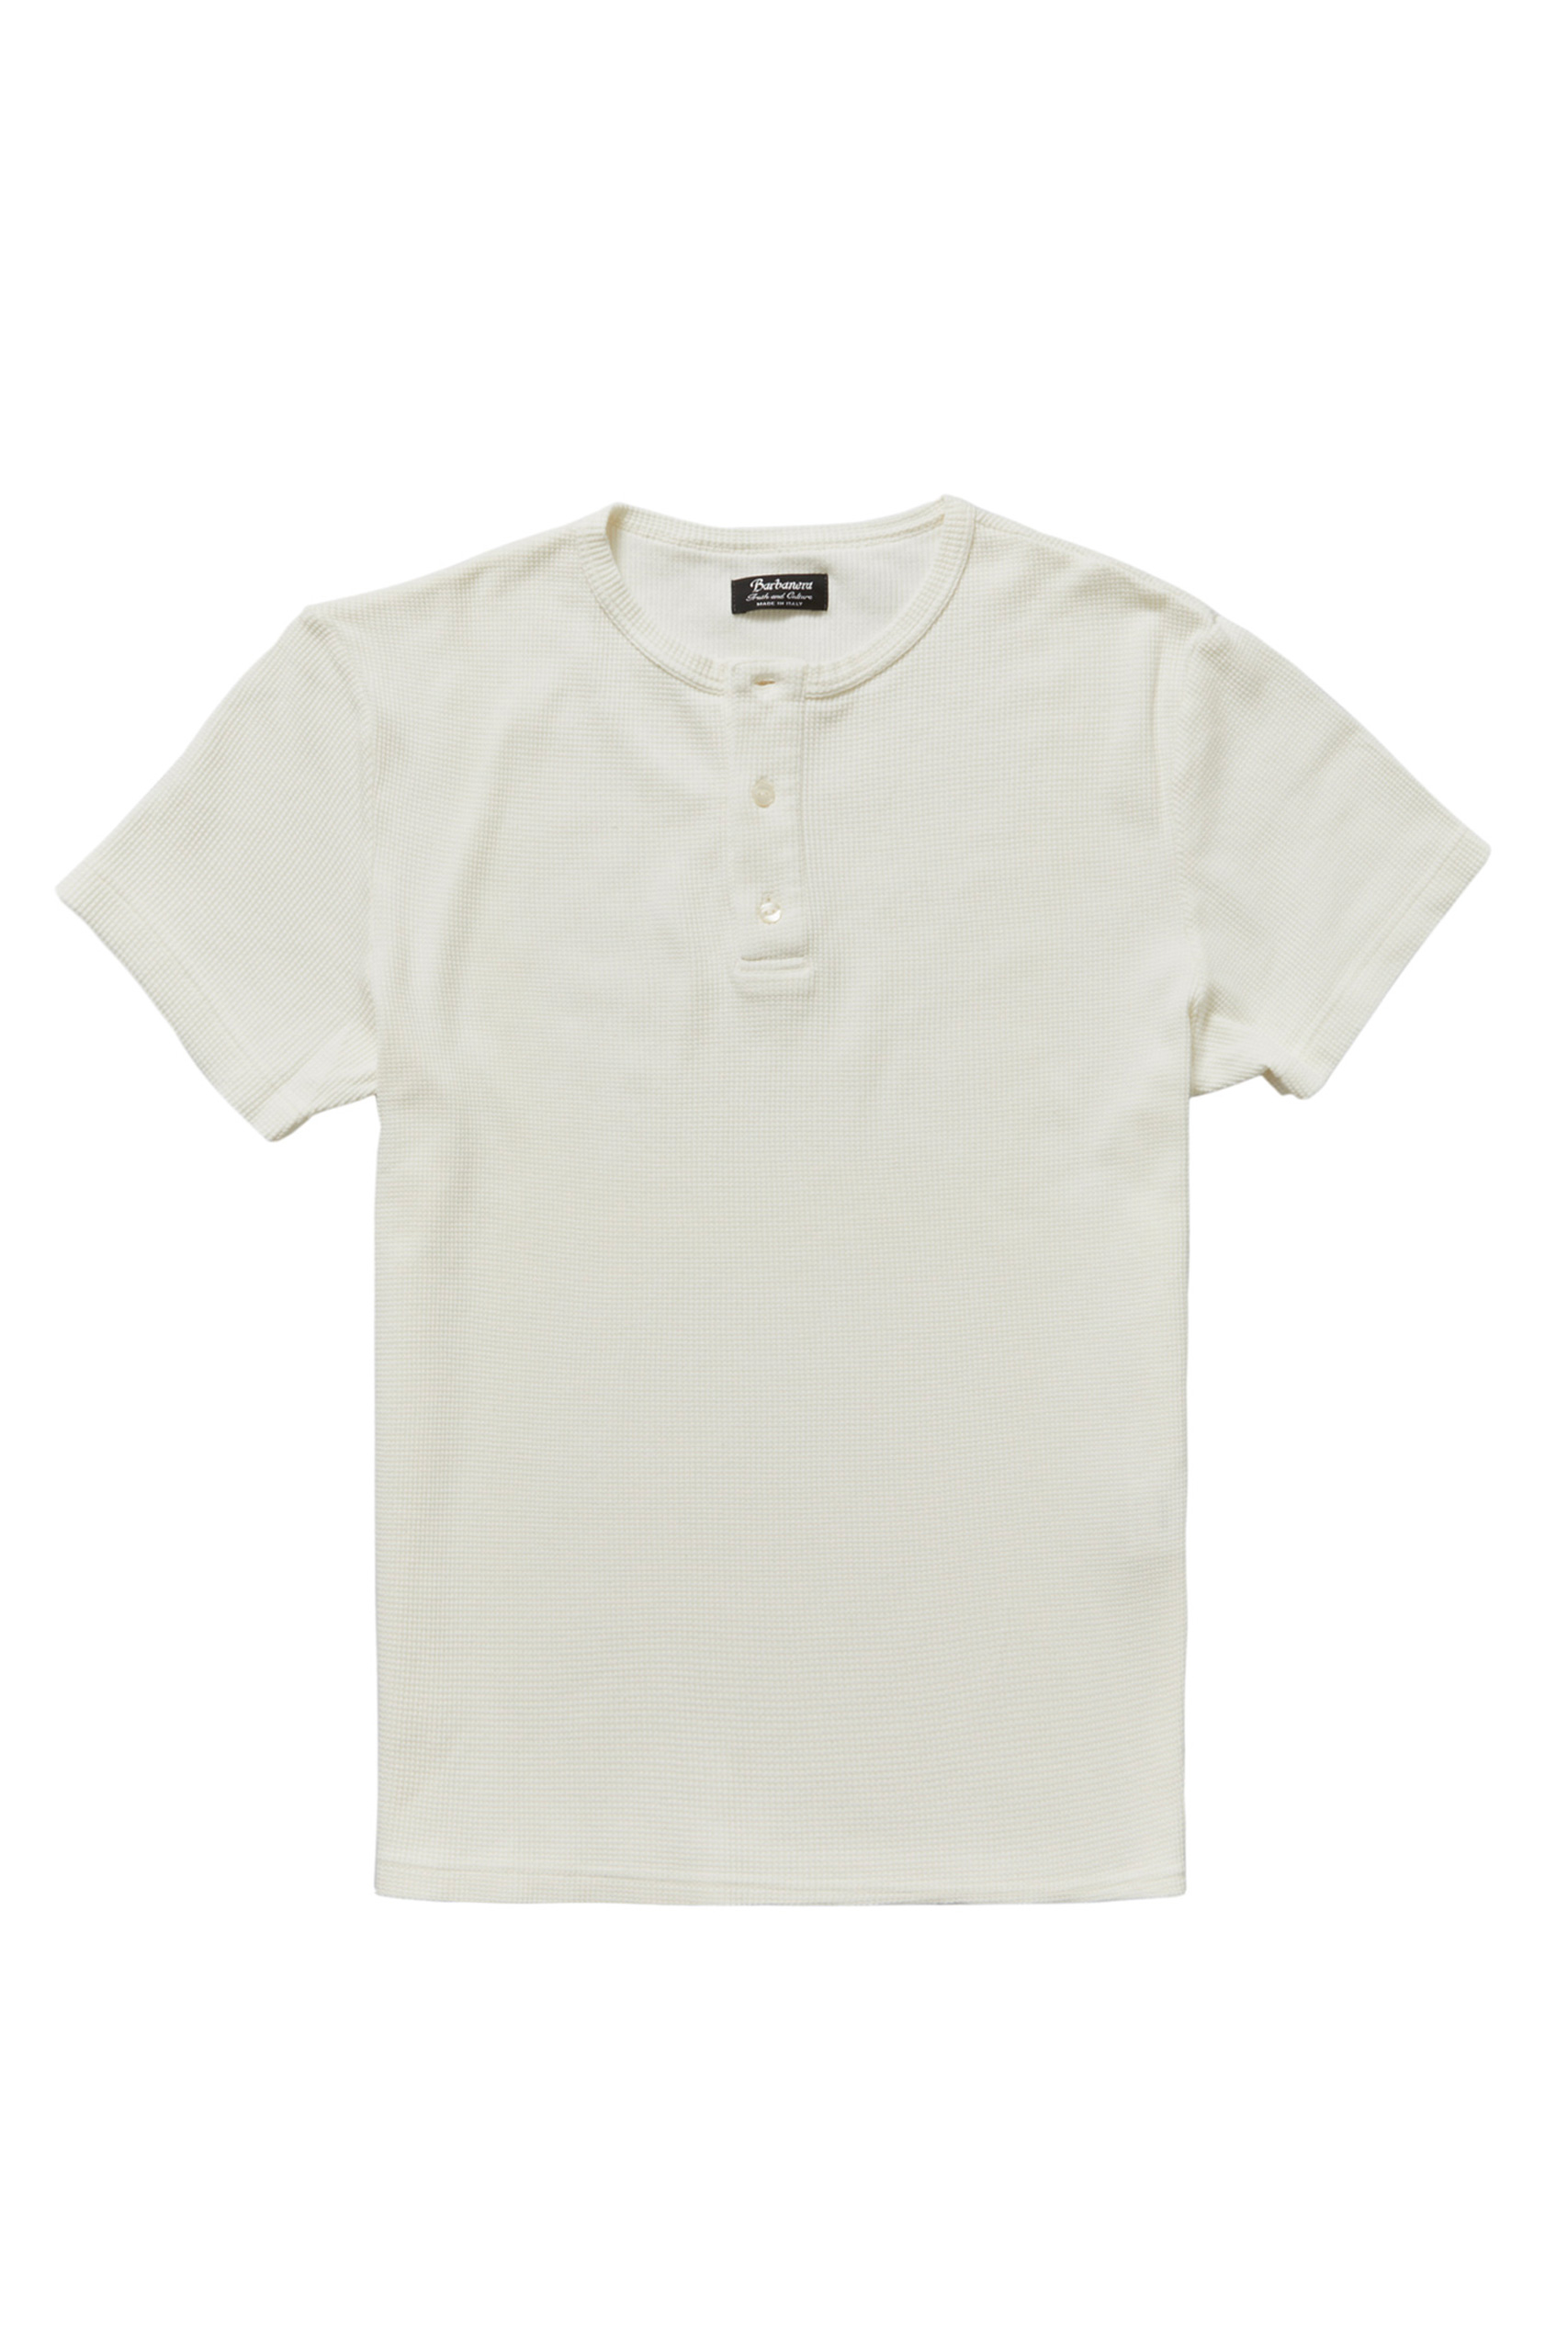 Tuco White Waffle Knit Cotton Henley T-Shirt - Barbanera